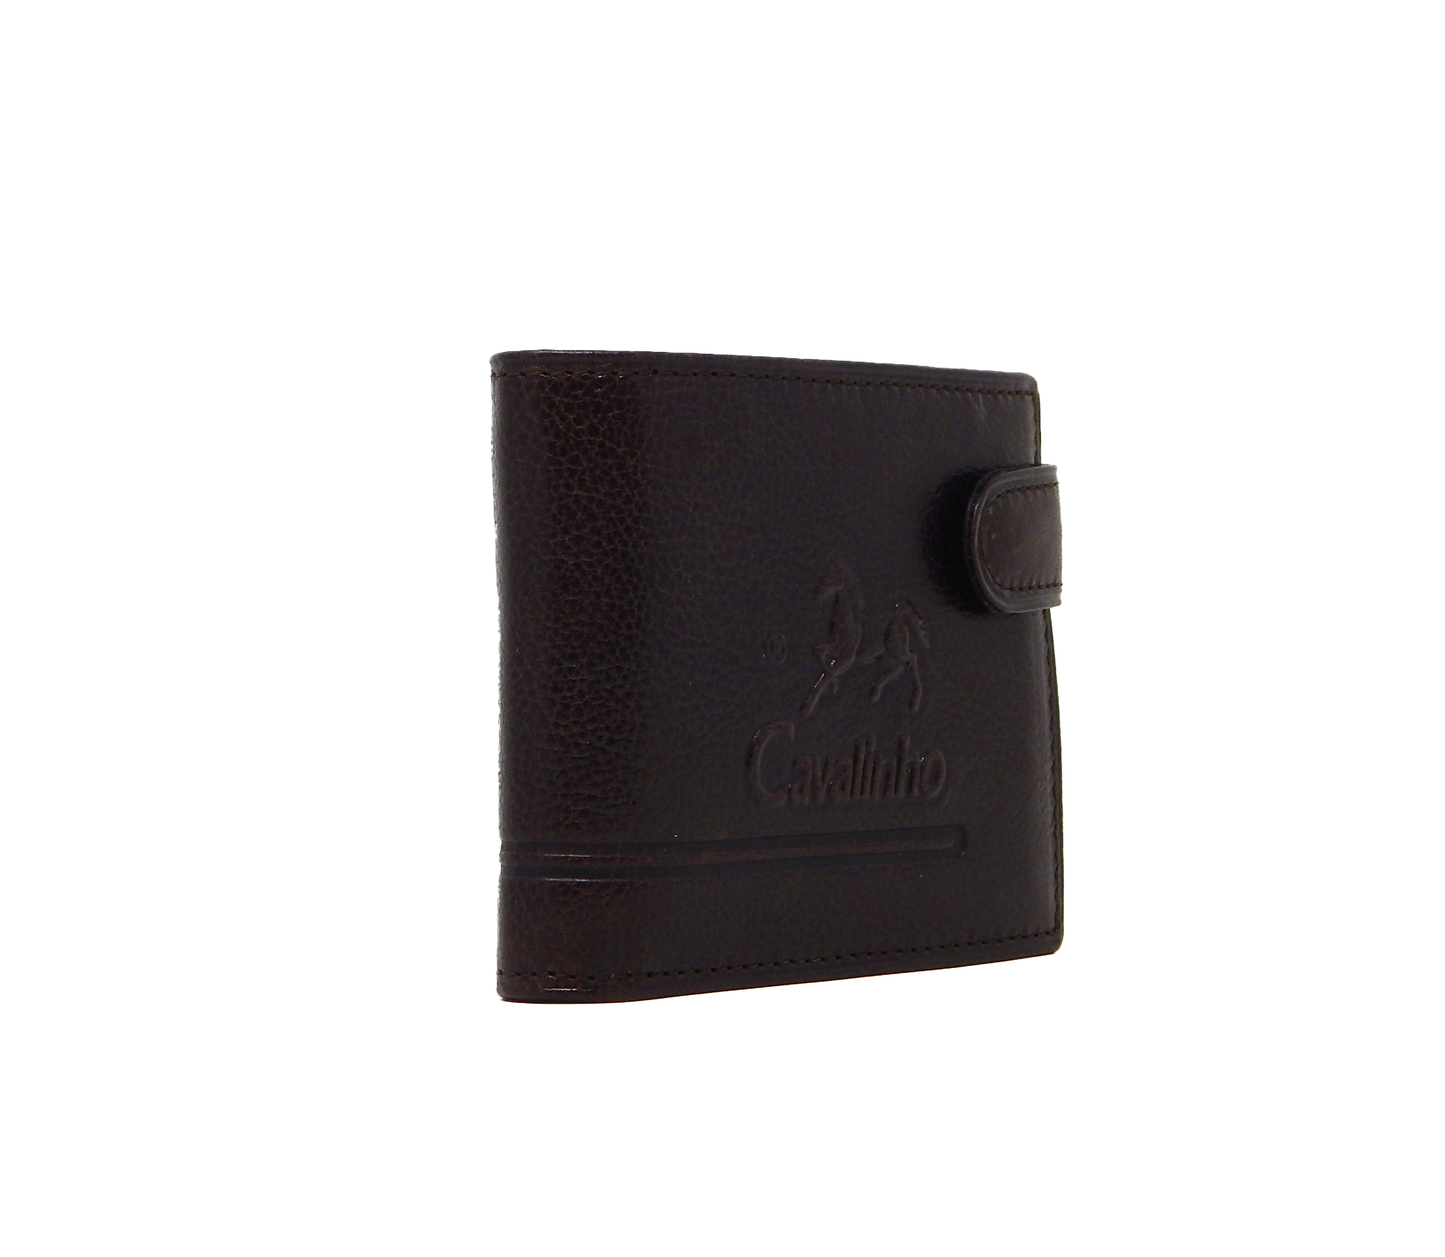 #color_ DarkBrown | Cavalinho Men's Bifold Leather Wallet - DarkBrown - 28610588.02_2